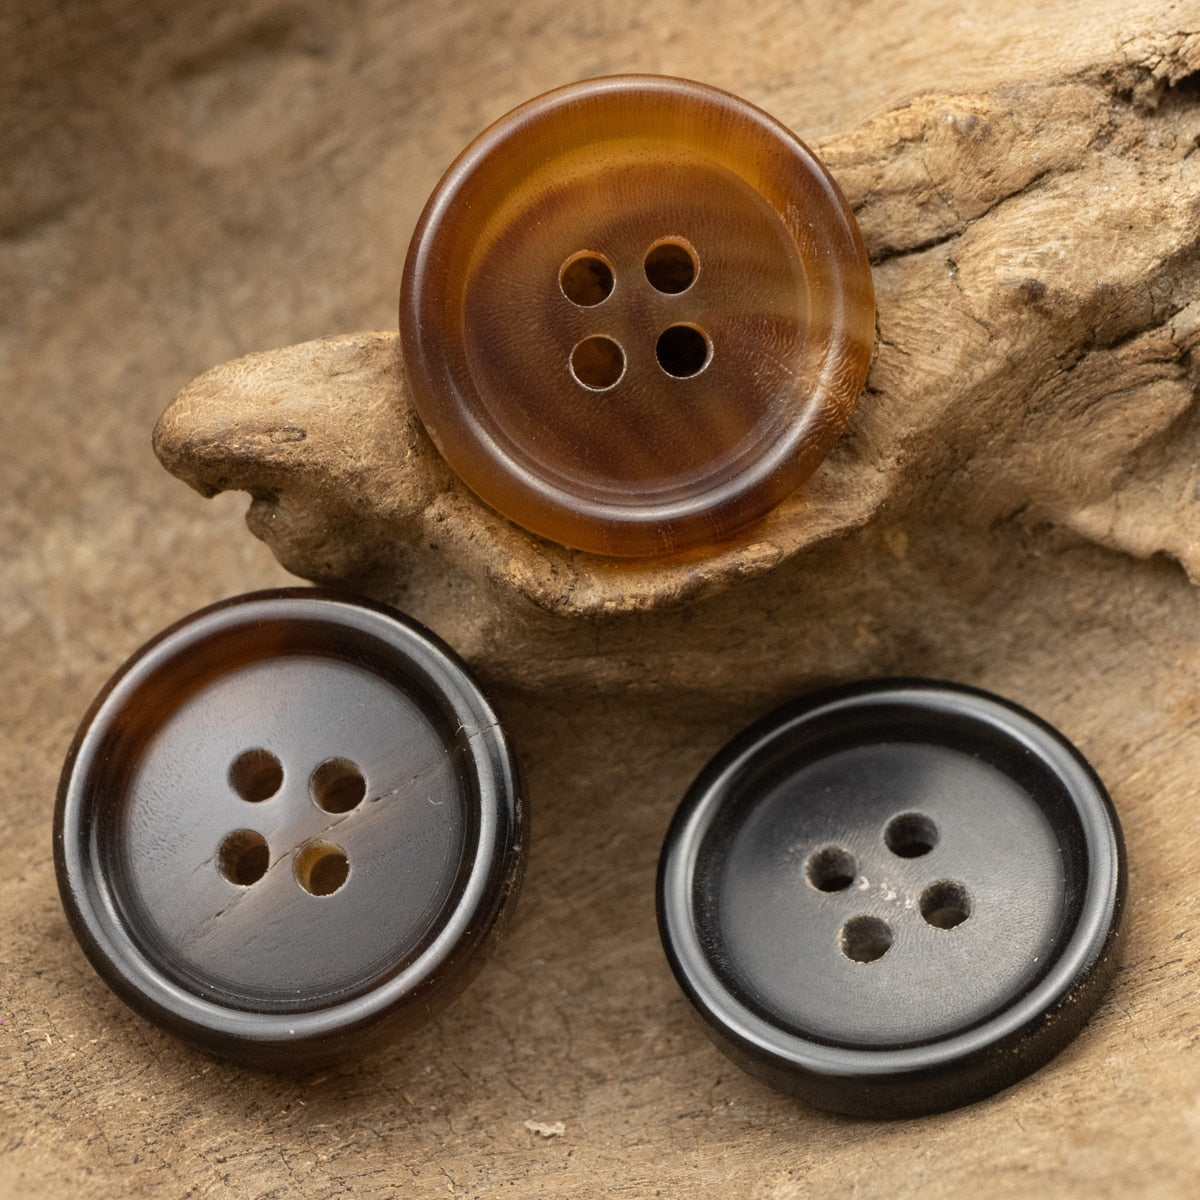 10pcs Genuine Horn Button Set for Suit Jacket Blazer Coat Light Brown Black Dark Brown Buttons